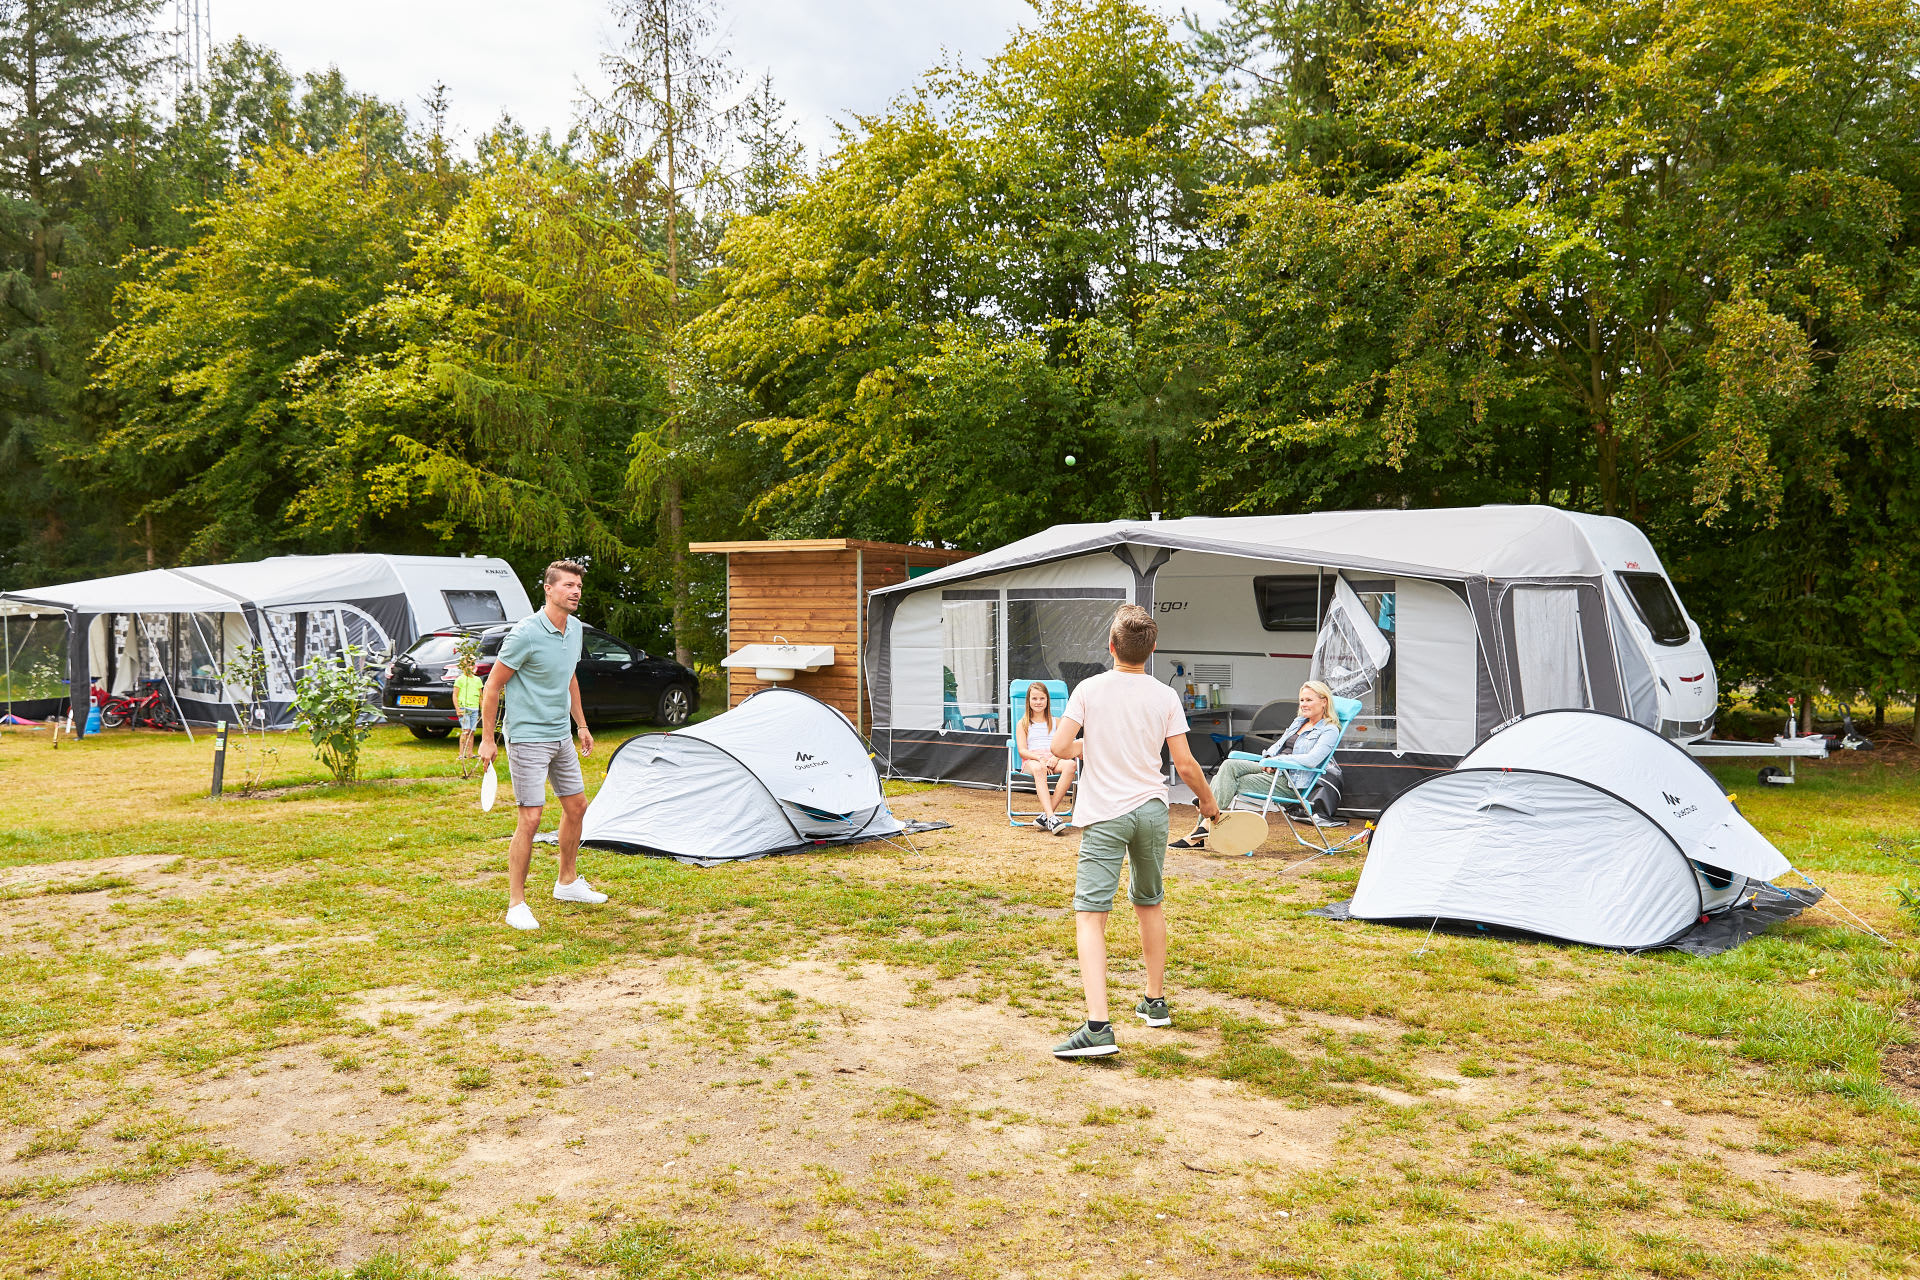 RCN de Jagerstee - Comfort kampeerplaats met prive sanitair